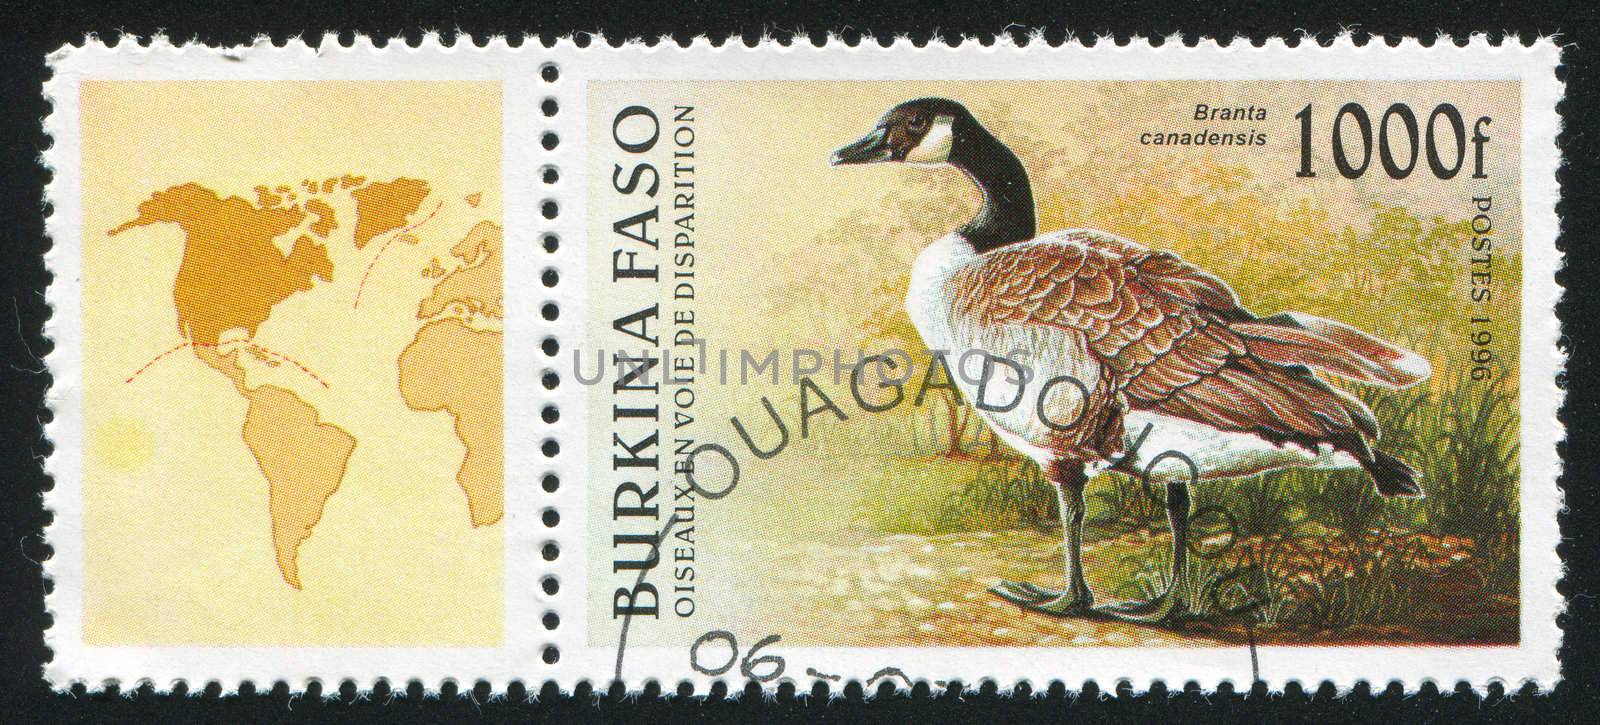 BURKINA FASO CIRCA 1996: stamp printed by Burkina Faso, shows Canada Goose, circa 1996